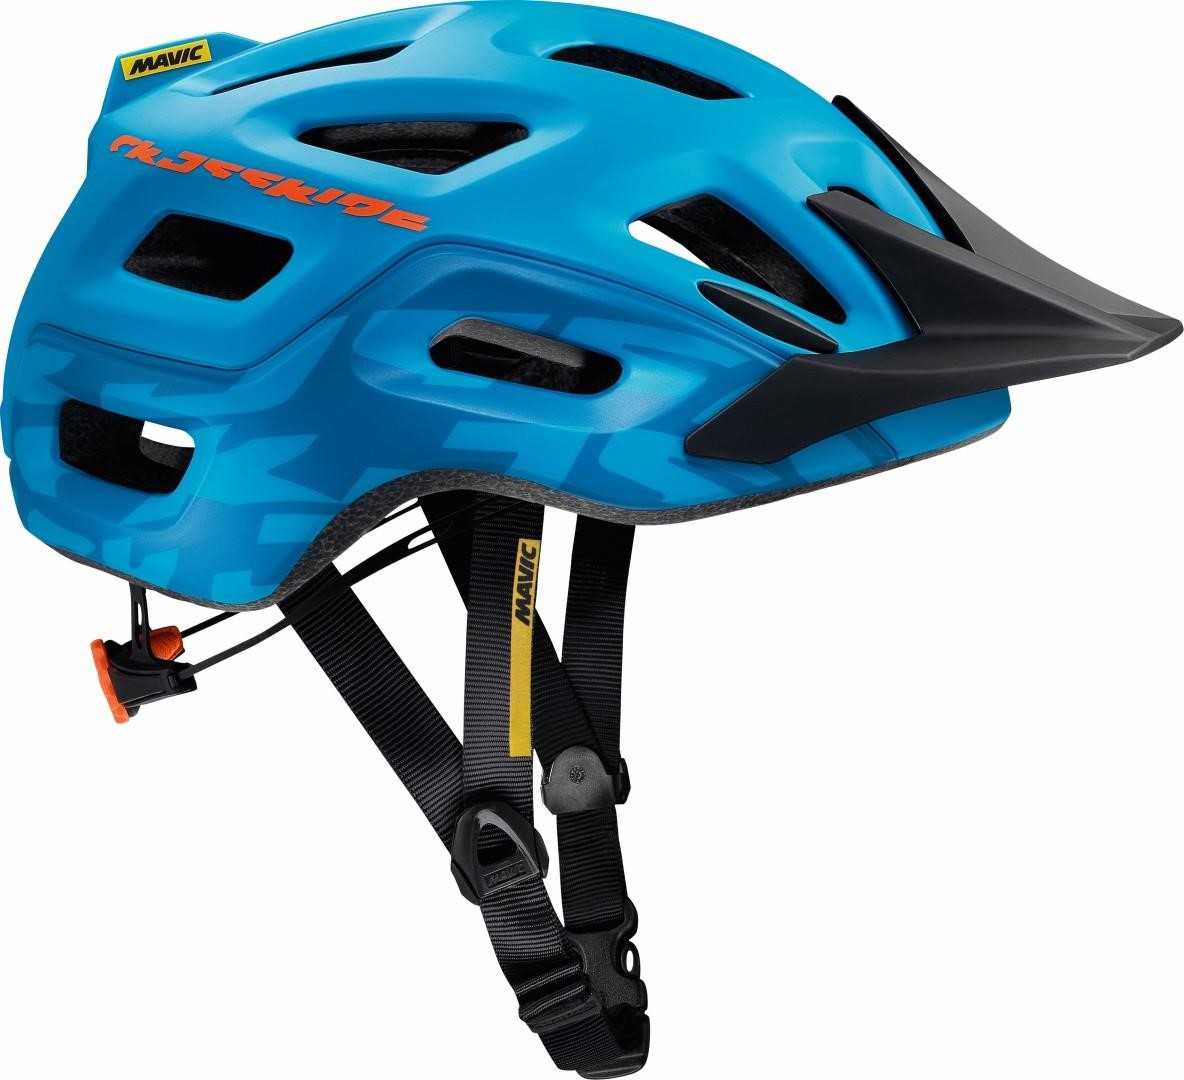 Mavic Crossride MTB Cycling Helmet 2017 product image